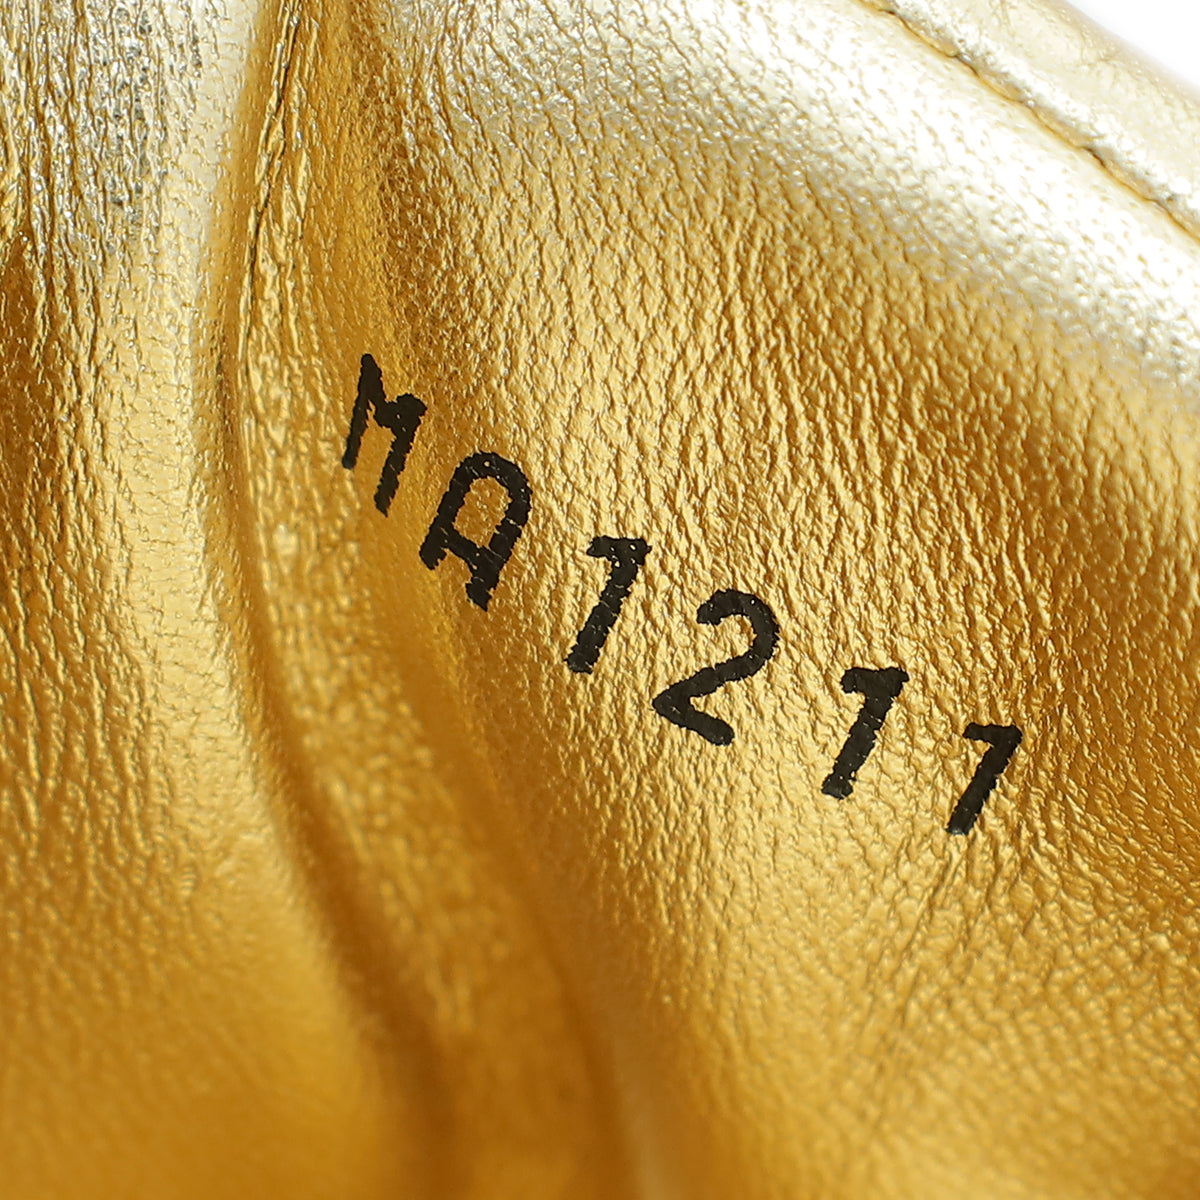 Louis Vuitton Gold Monogram Embossed Sunset Flat Comfort Mules 37